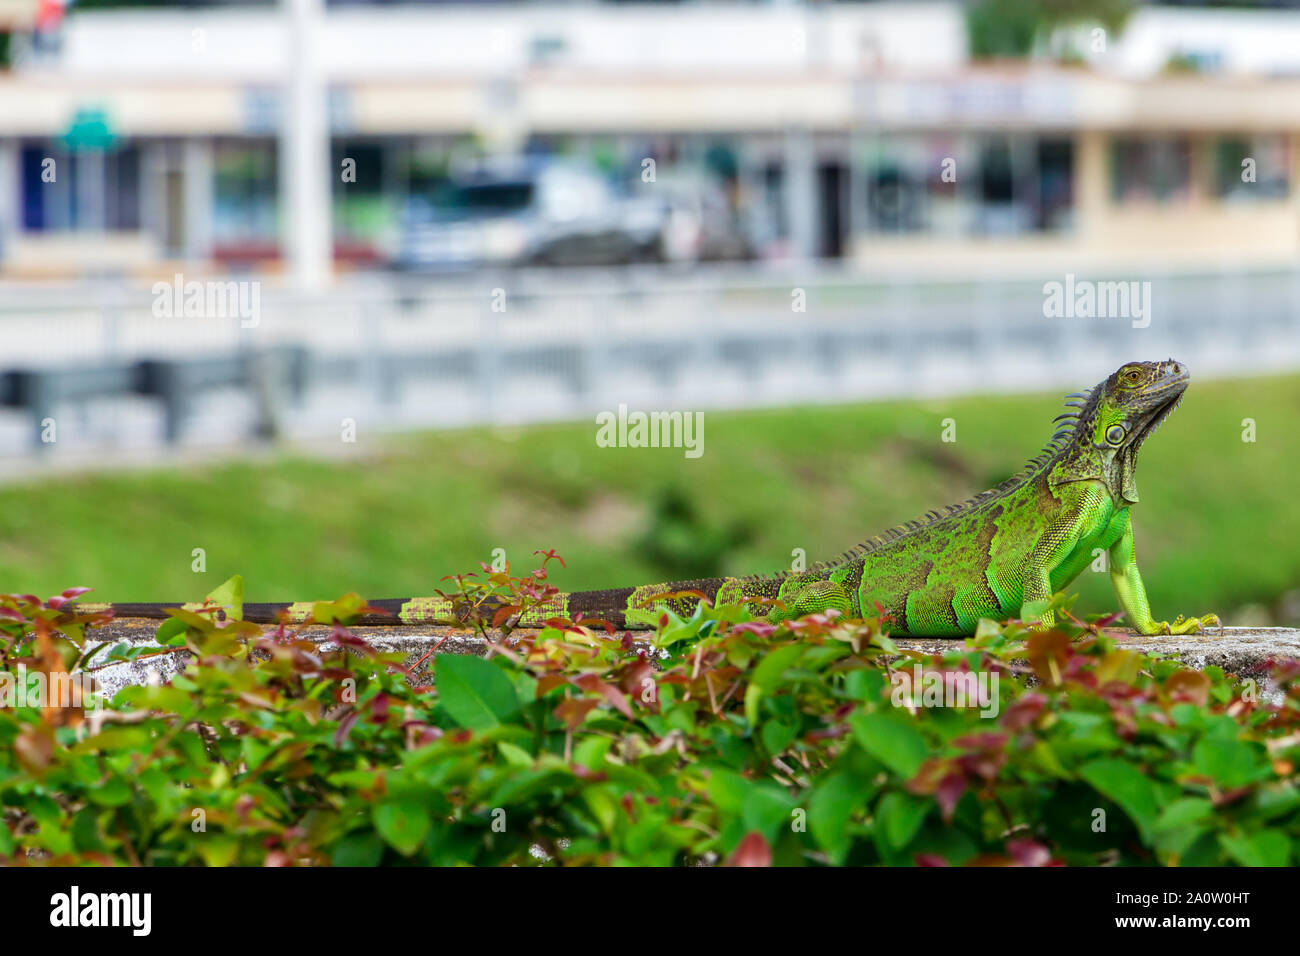 Green iguana (iguana iguana) on wall in urban environment, copyspace - Pembroke Pines, Florida, USA Stock Photo